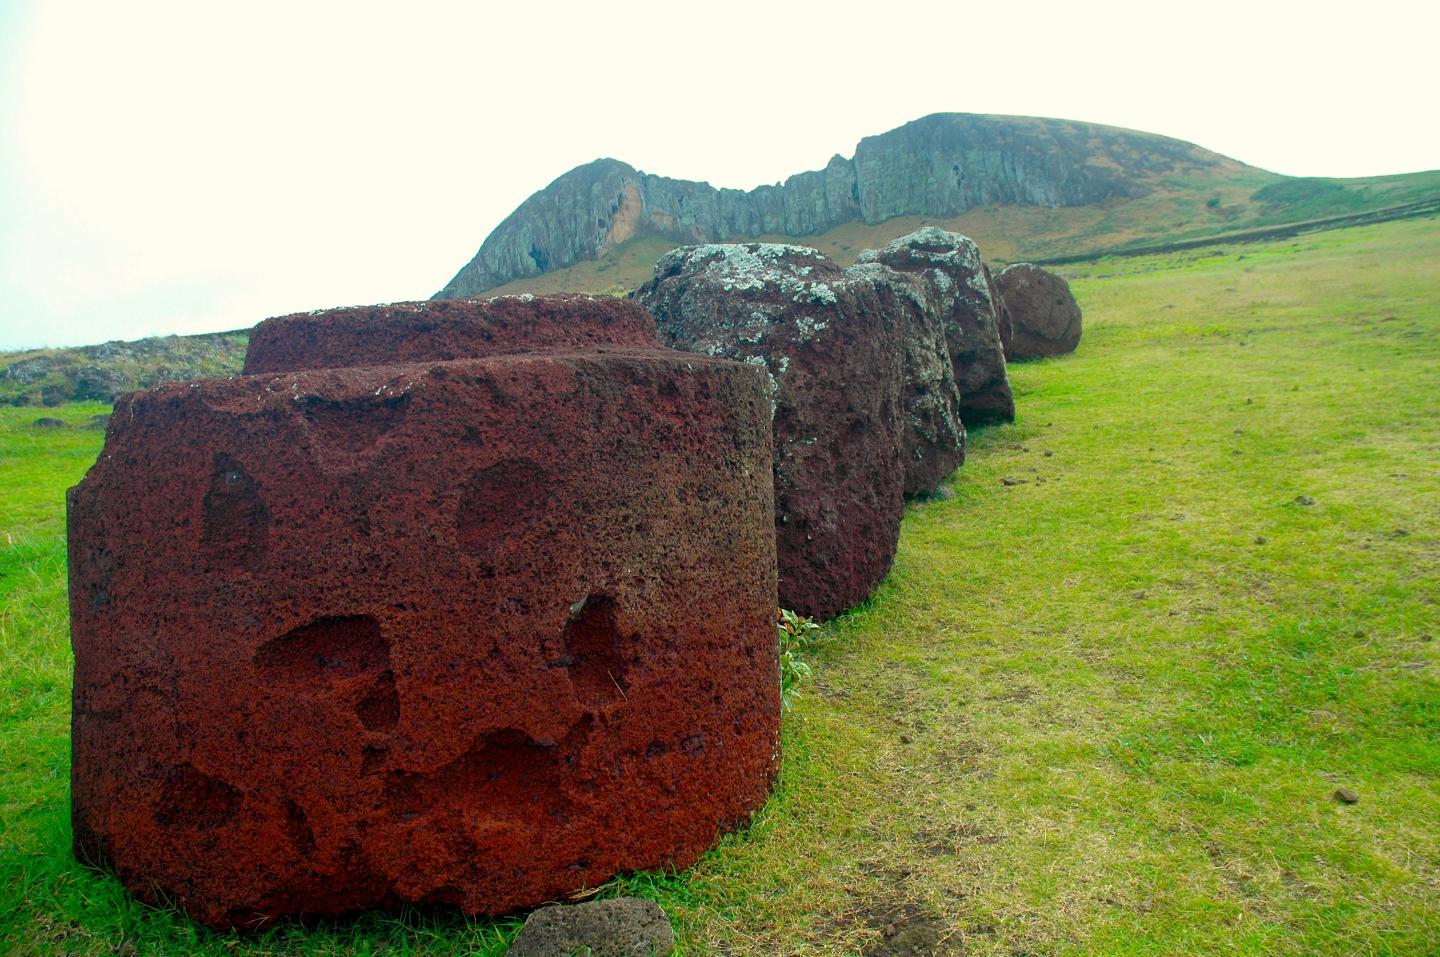 Easter Island pukao